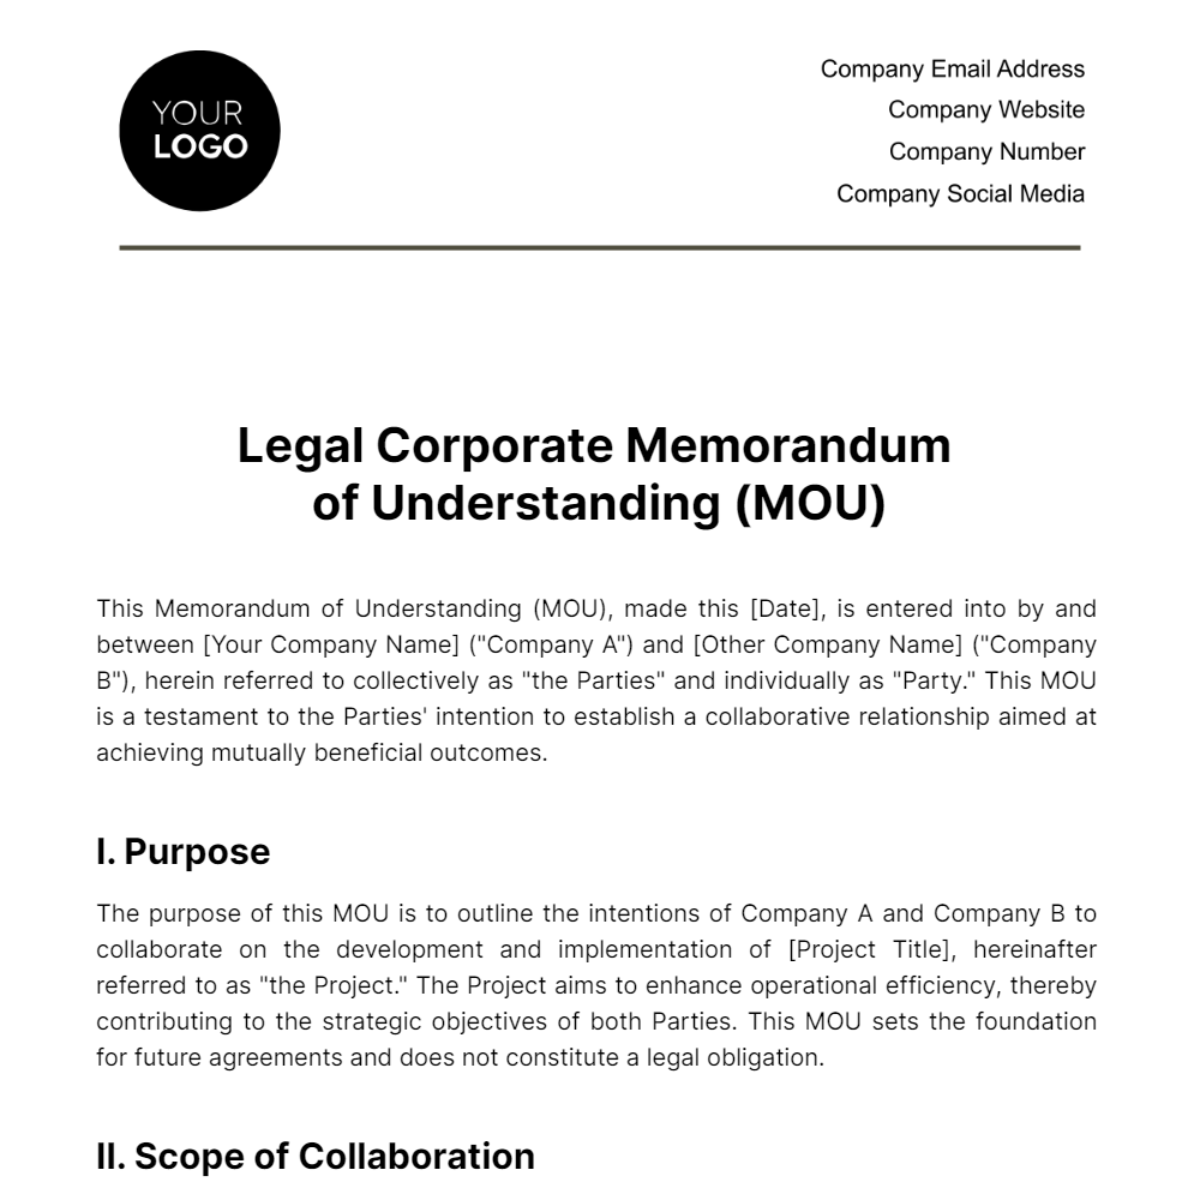 Free Legal Corporate Memorandum of Understanding (MOU) Template